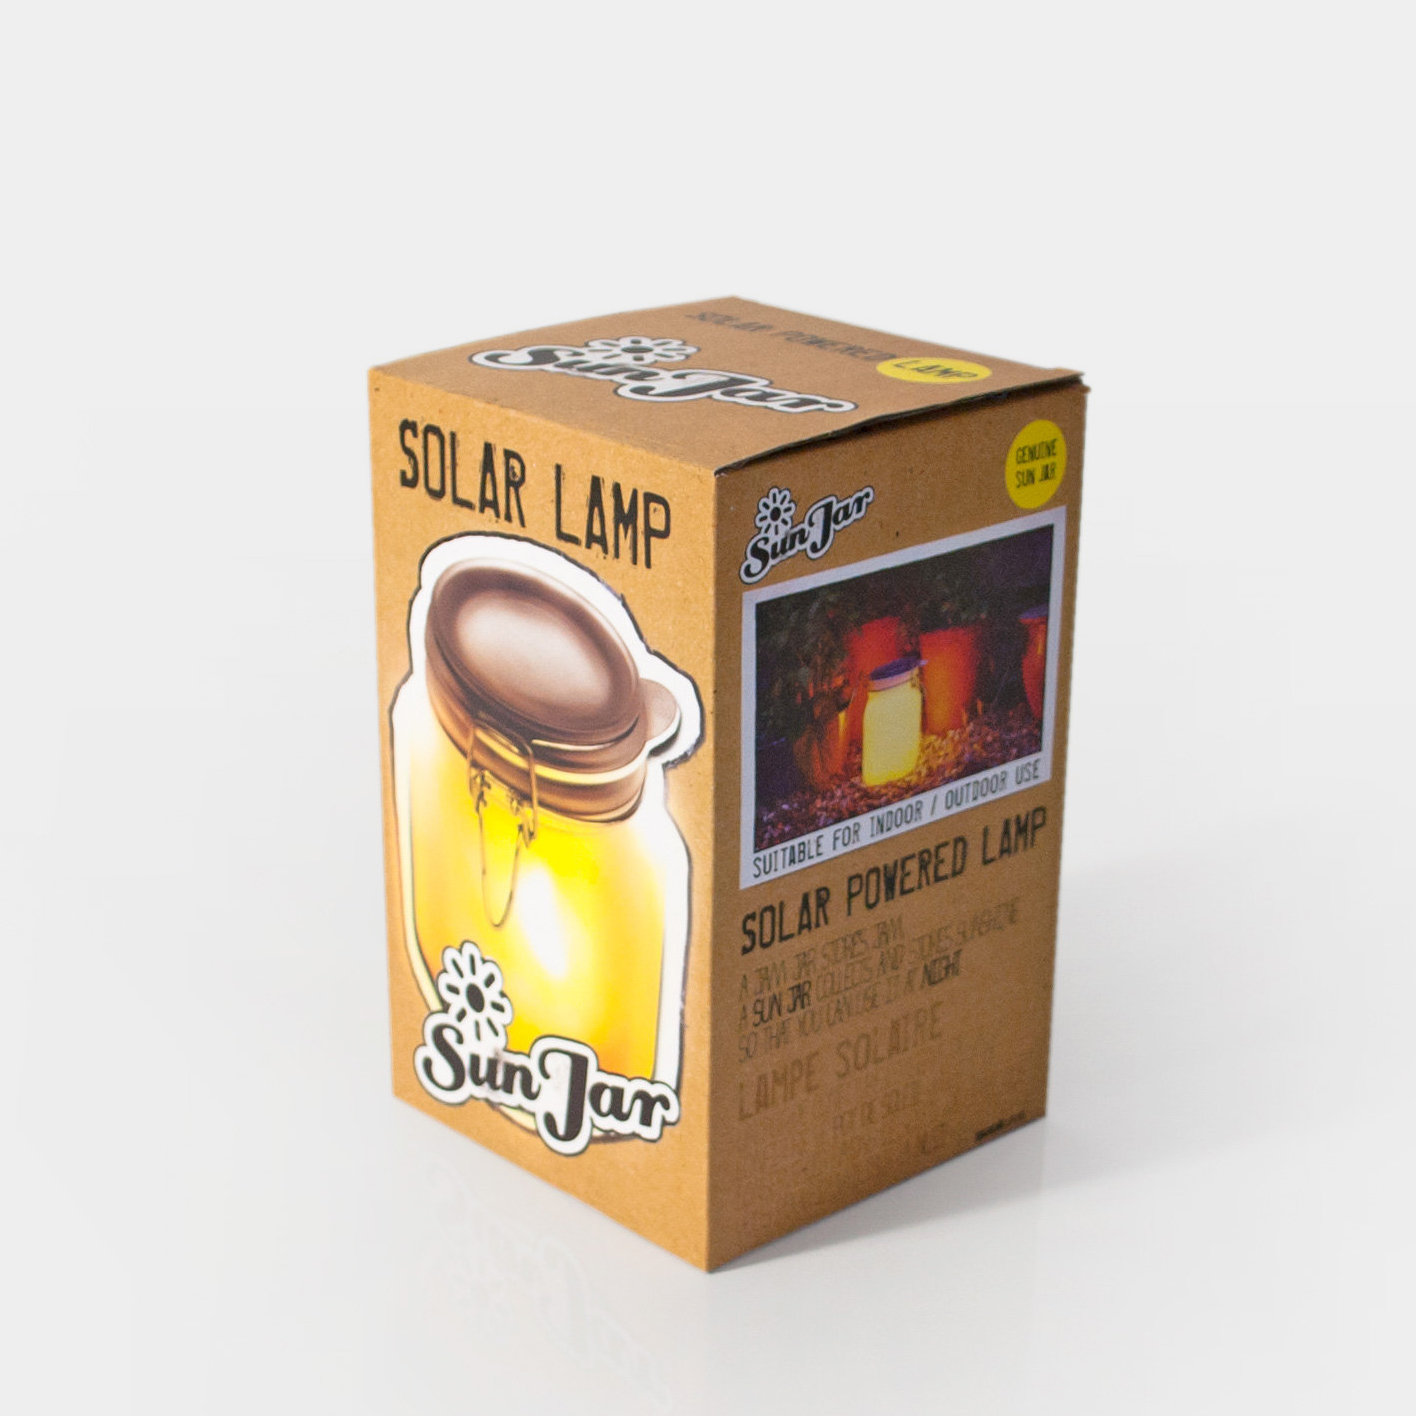 Sun Jar Packaging Design by SUCK UK